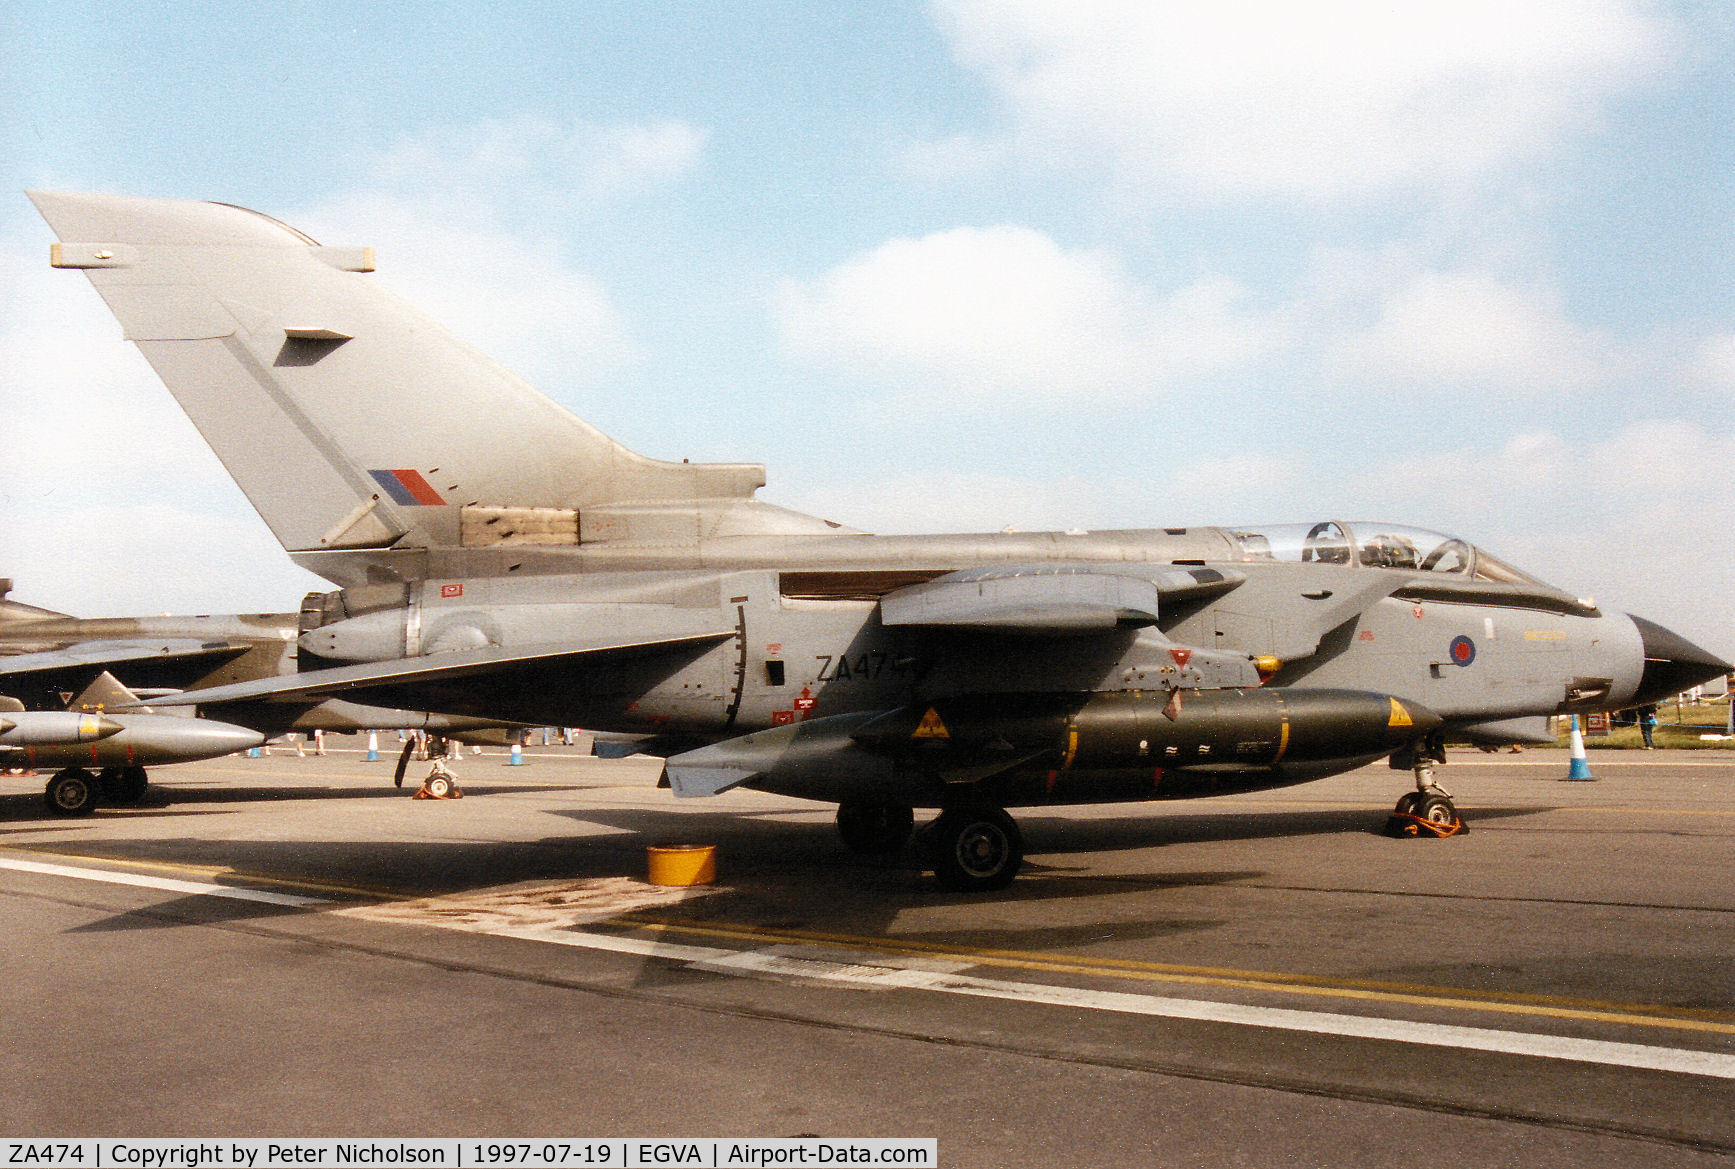 ZA474, 1983 Panavia Tornado GR.1B C/N 300/BS104/3140, Tornado GR.1B, callsign Wolf 2, of 12 Squadron at RAF Lossiemouth on display at the 1997 Intnl Air Tattoo at RAF Fairford.